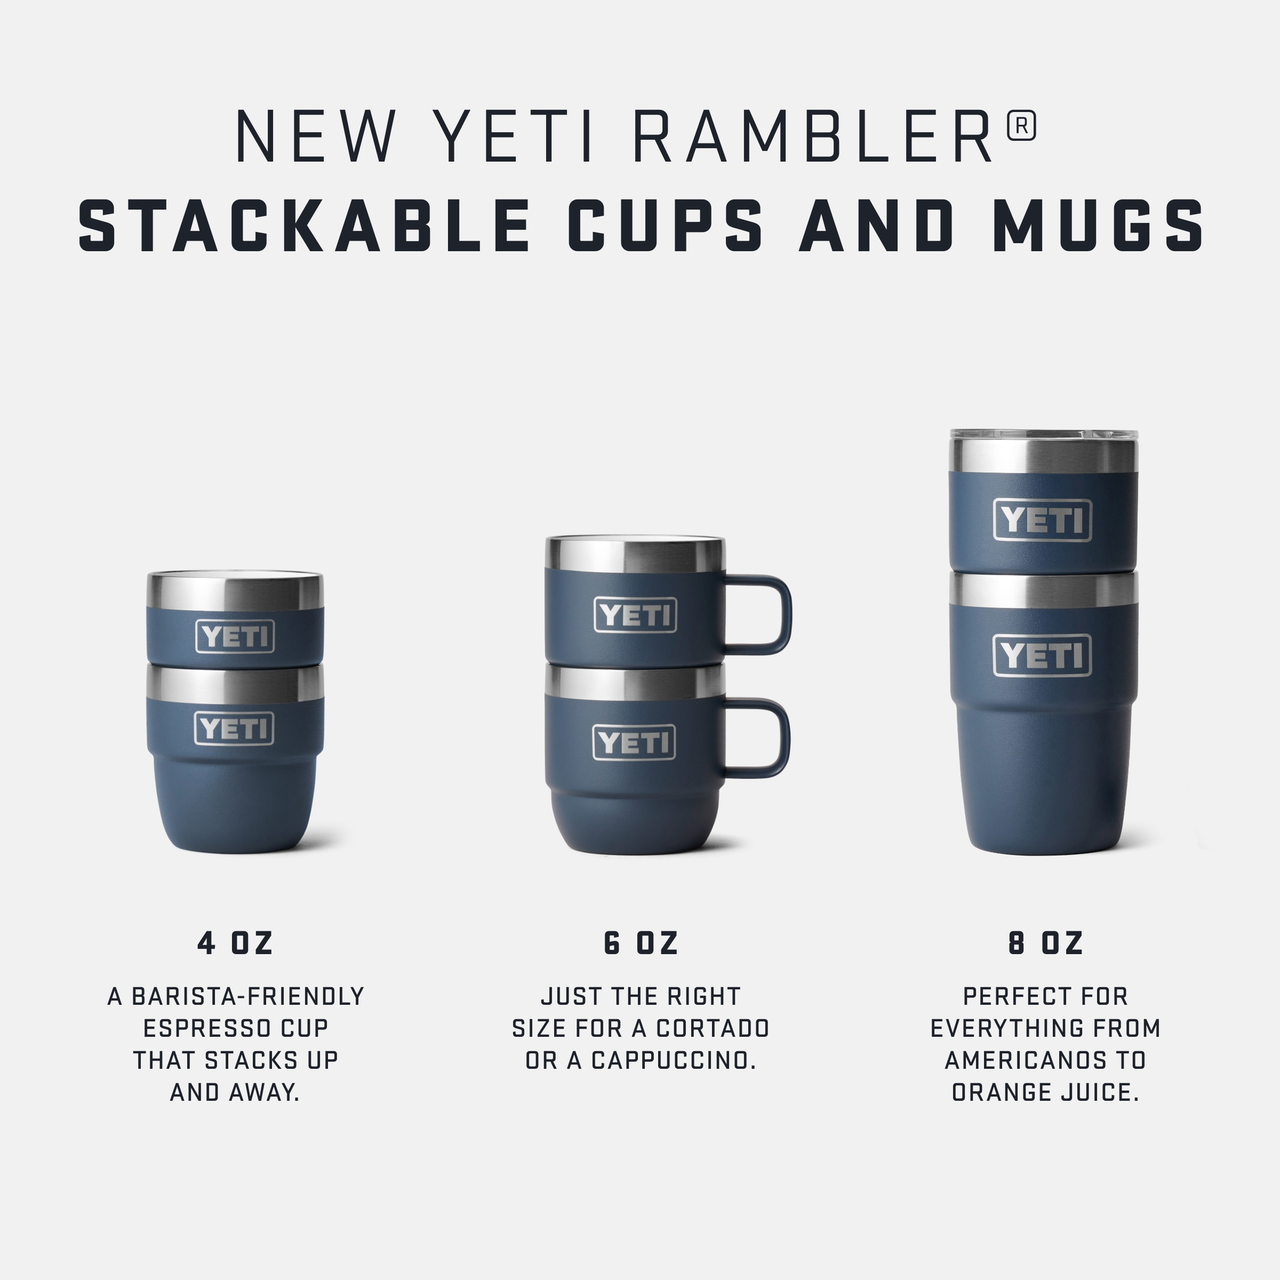 YETI Rambler 6 oz Stackable Mug, Stainless Steel, Vacuum Insulated  Espresso/Coffee Mug, 2 Pack, Black